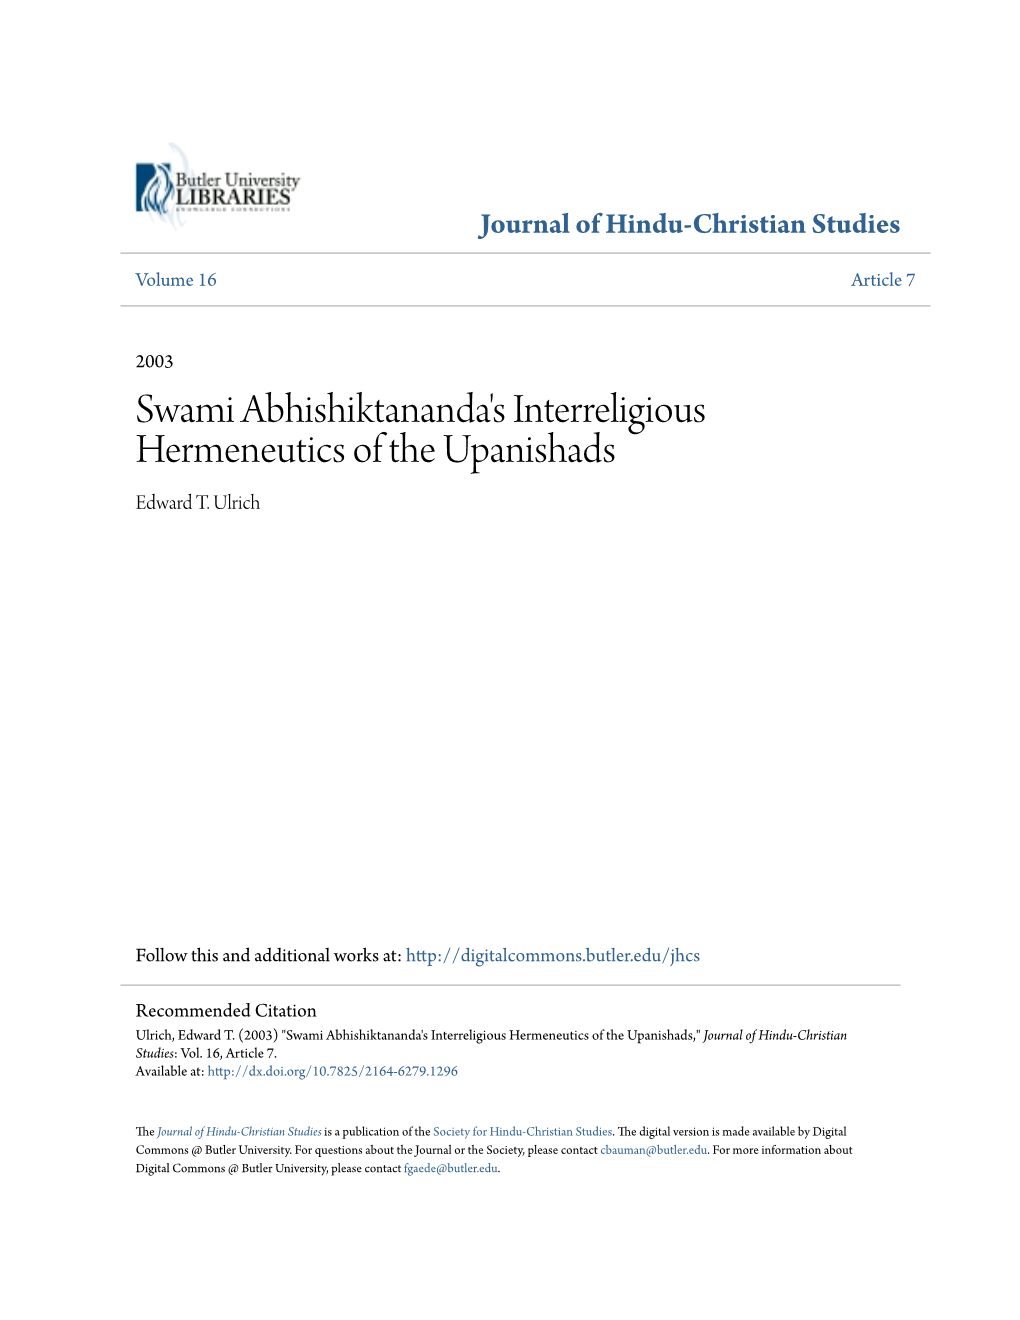 Swami Abhishiktananda's Interreligious Hermeneutics of the Upanishads Edward T